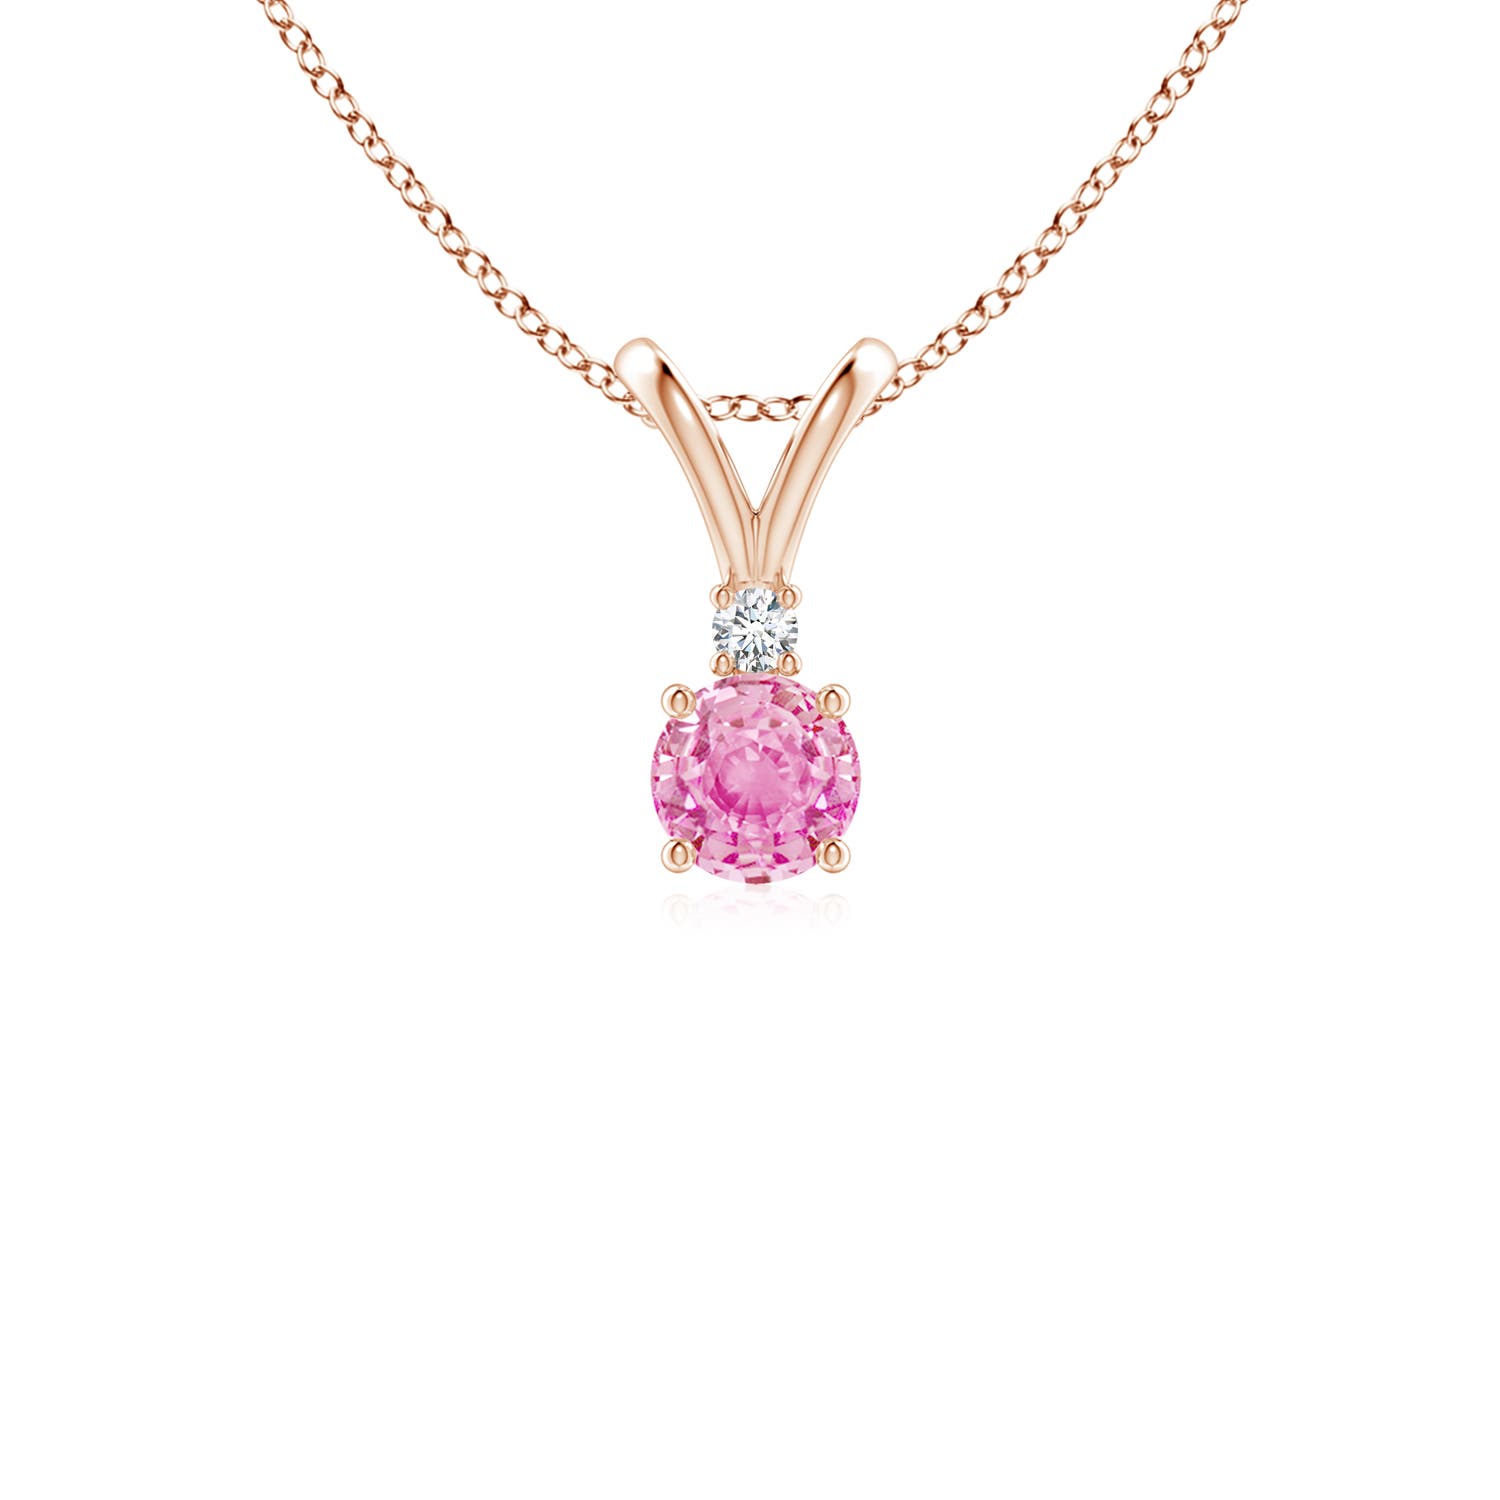 A - Pink Sapphire / 0.34 CT / 14 KT Rose Gold